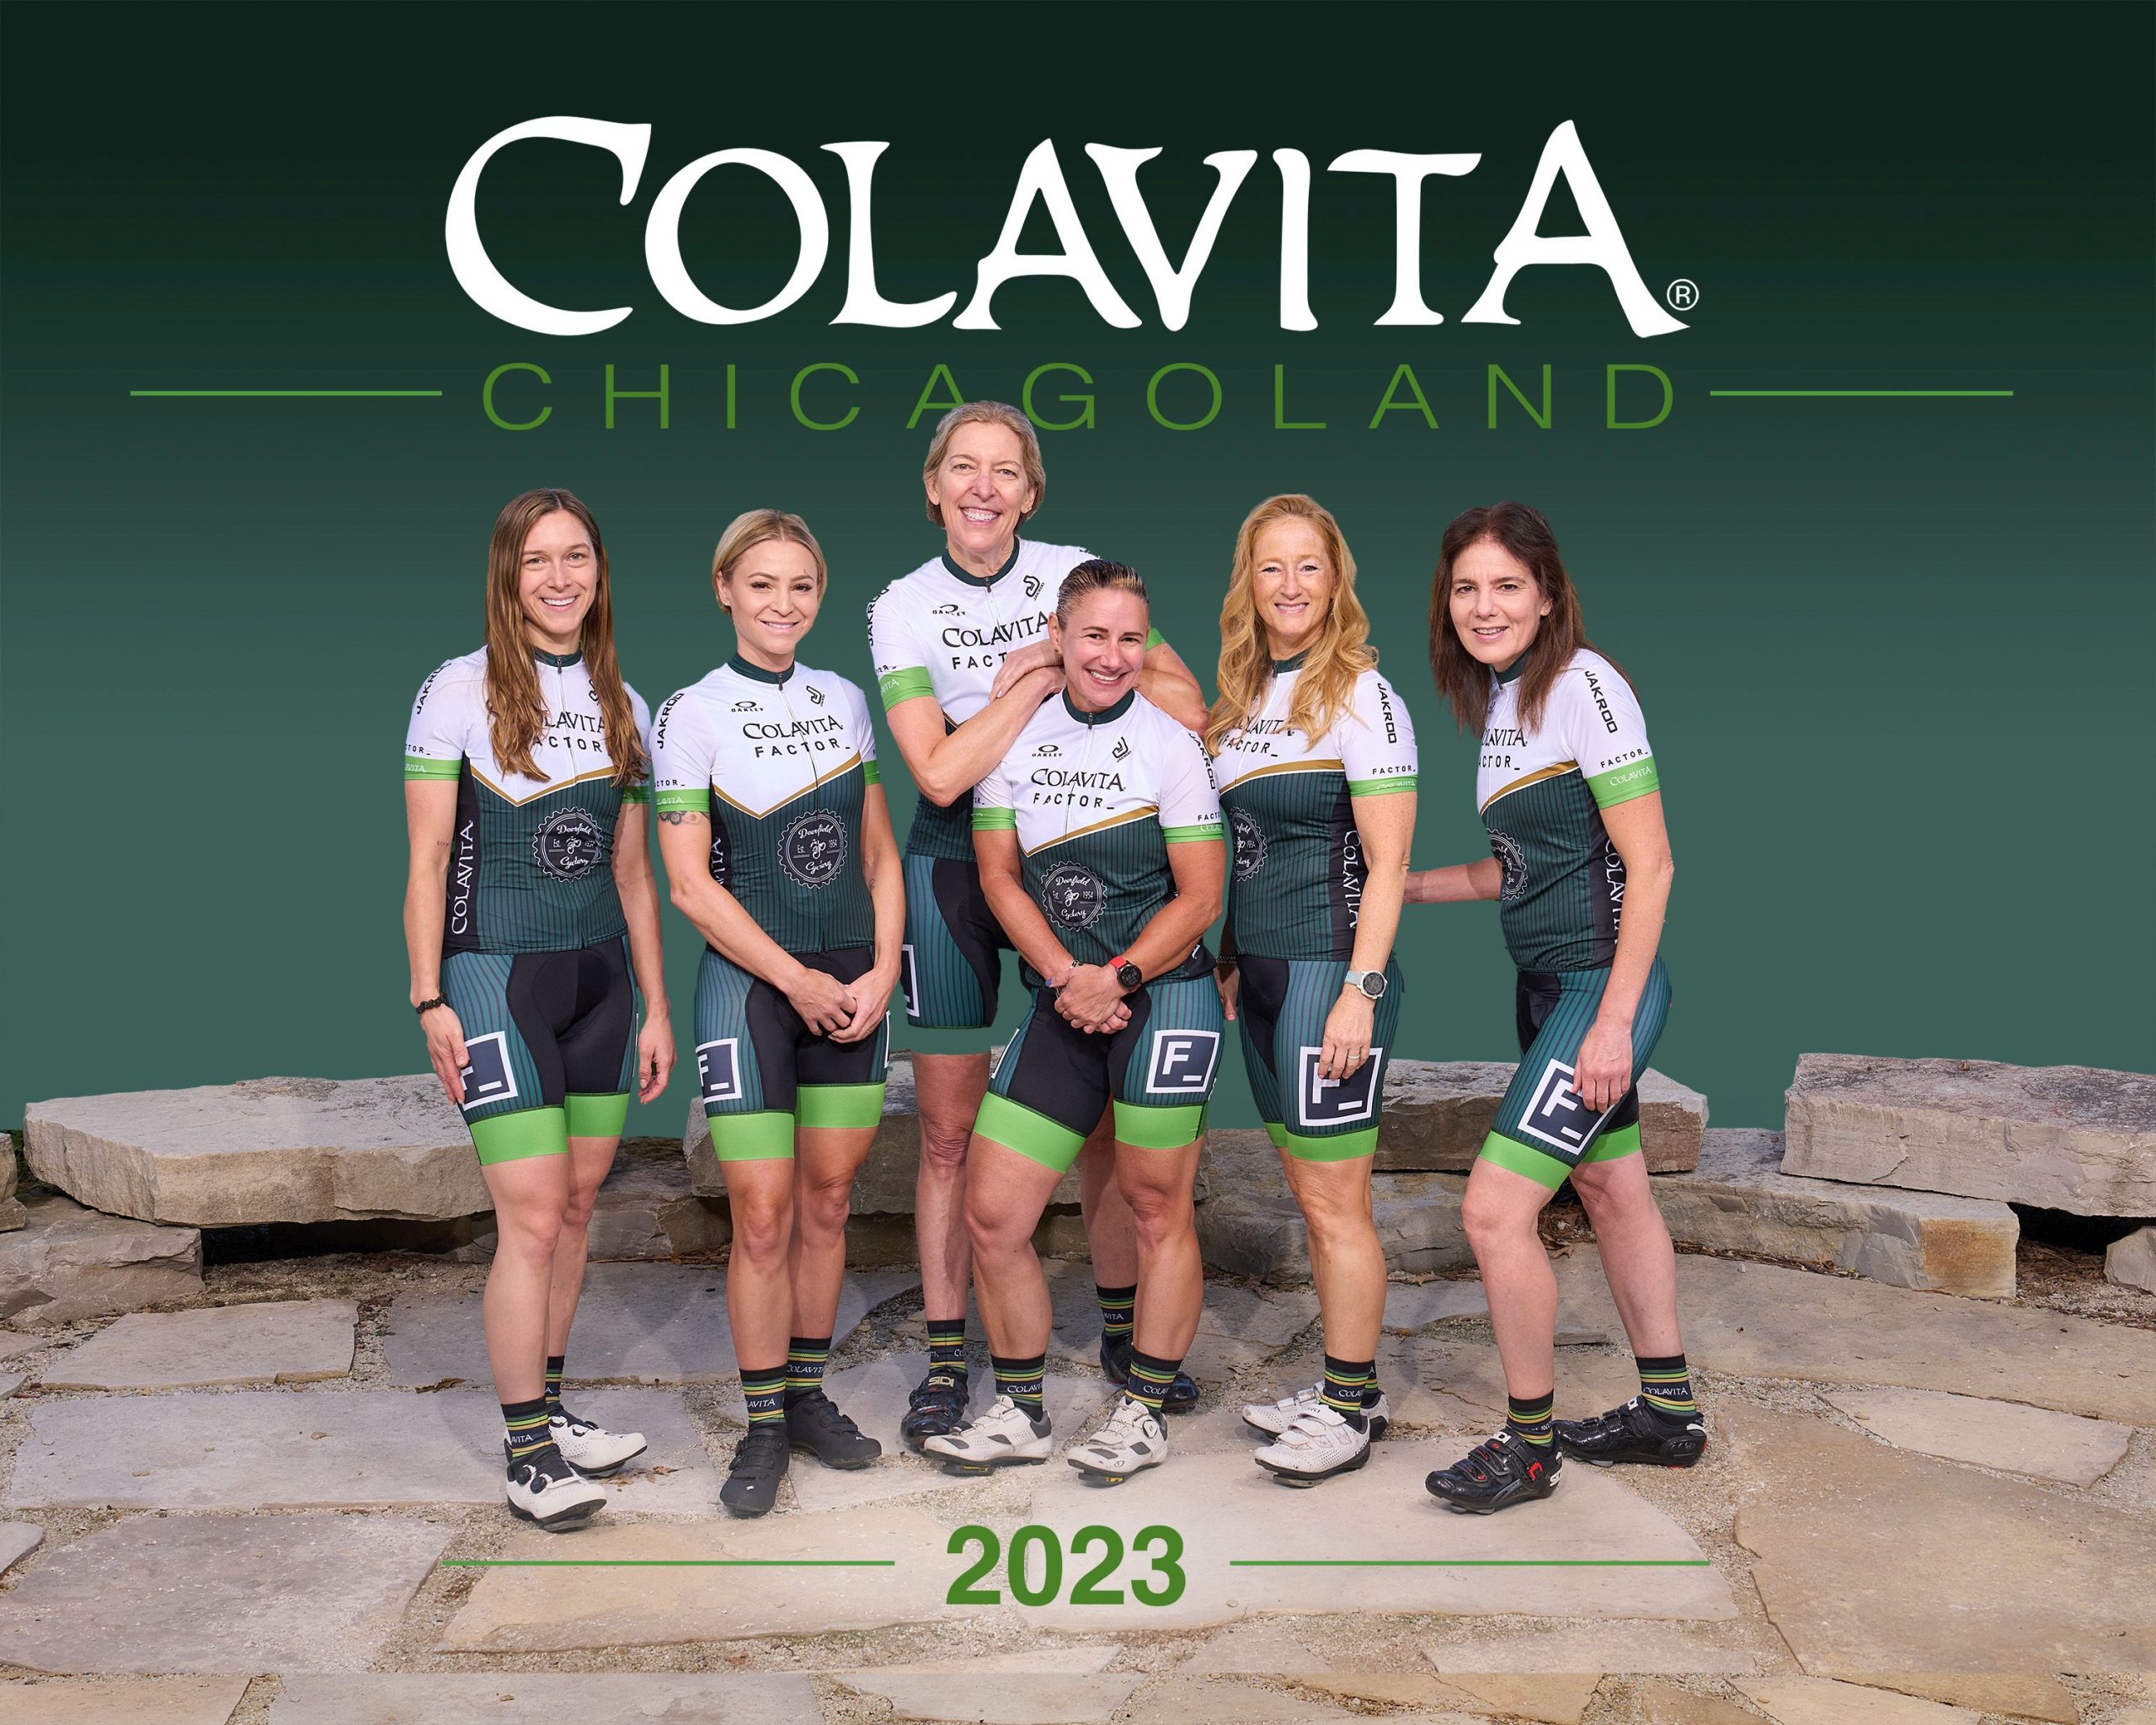 Colavita Chicagoland Women 2023